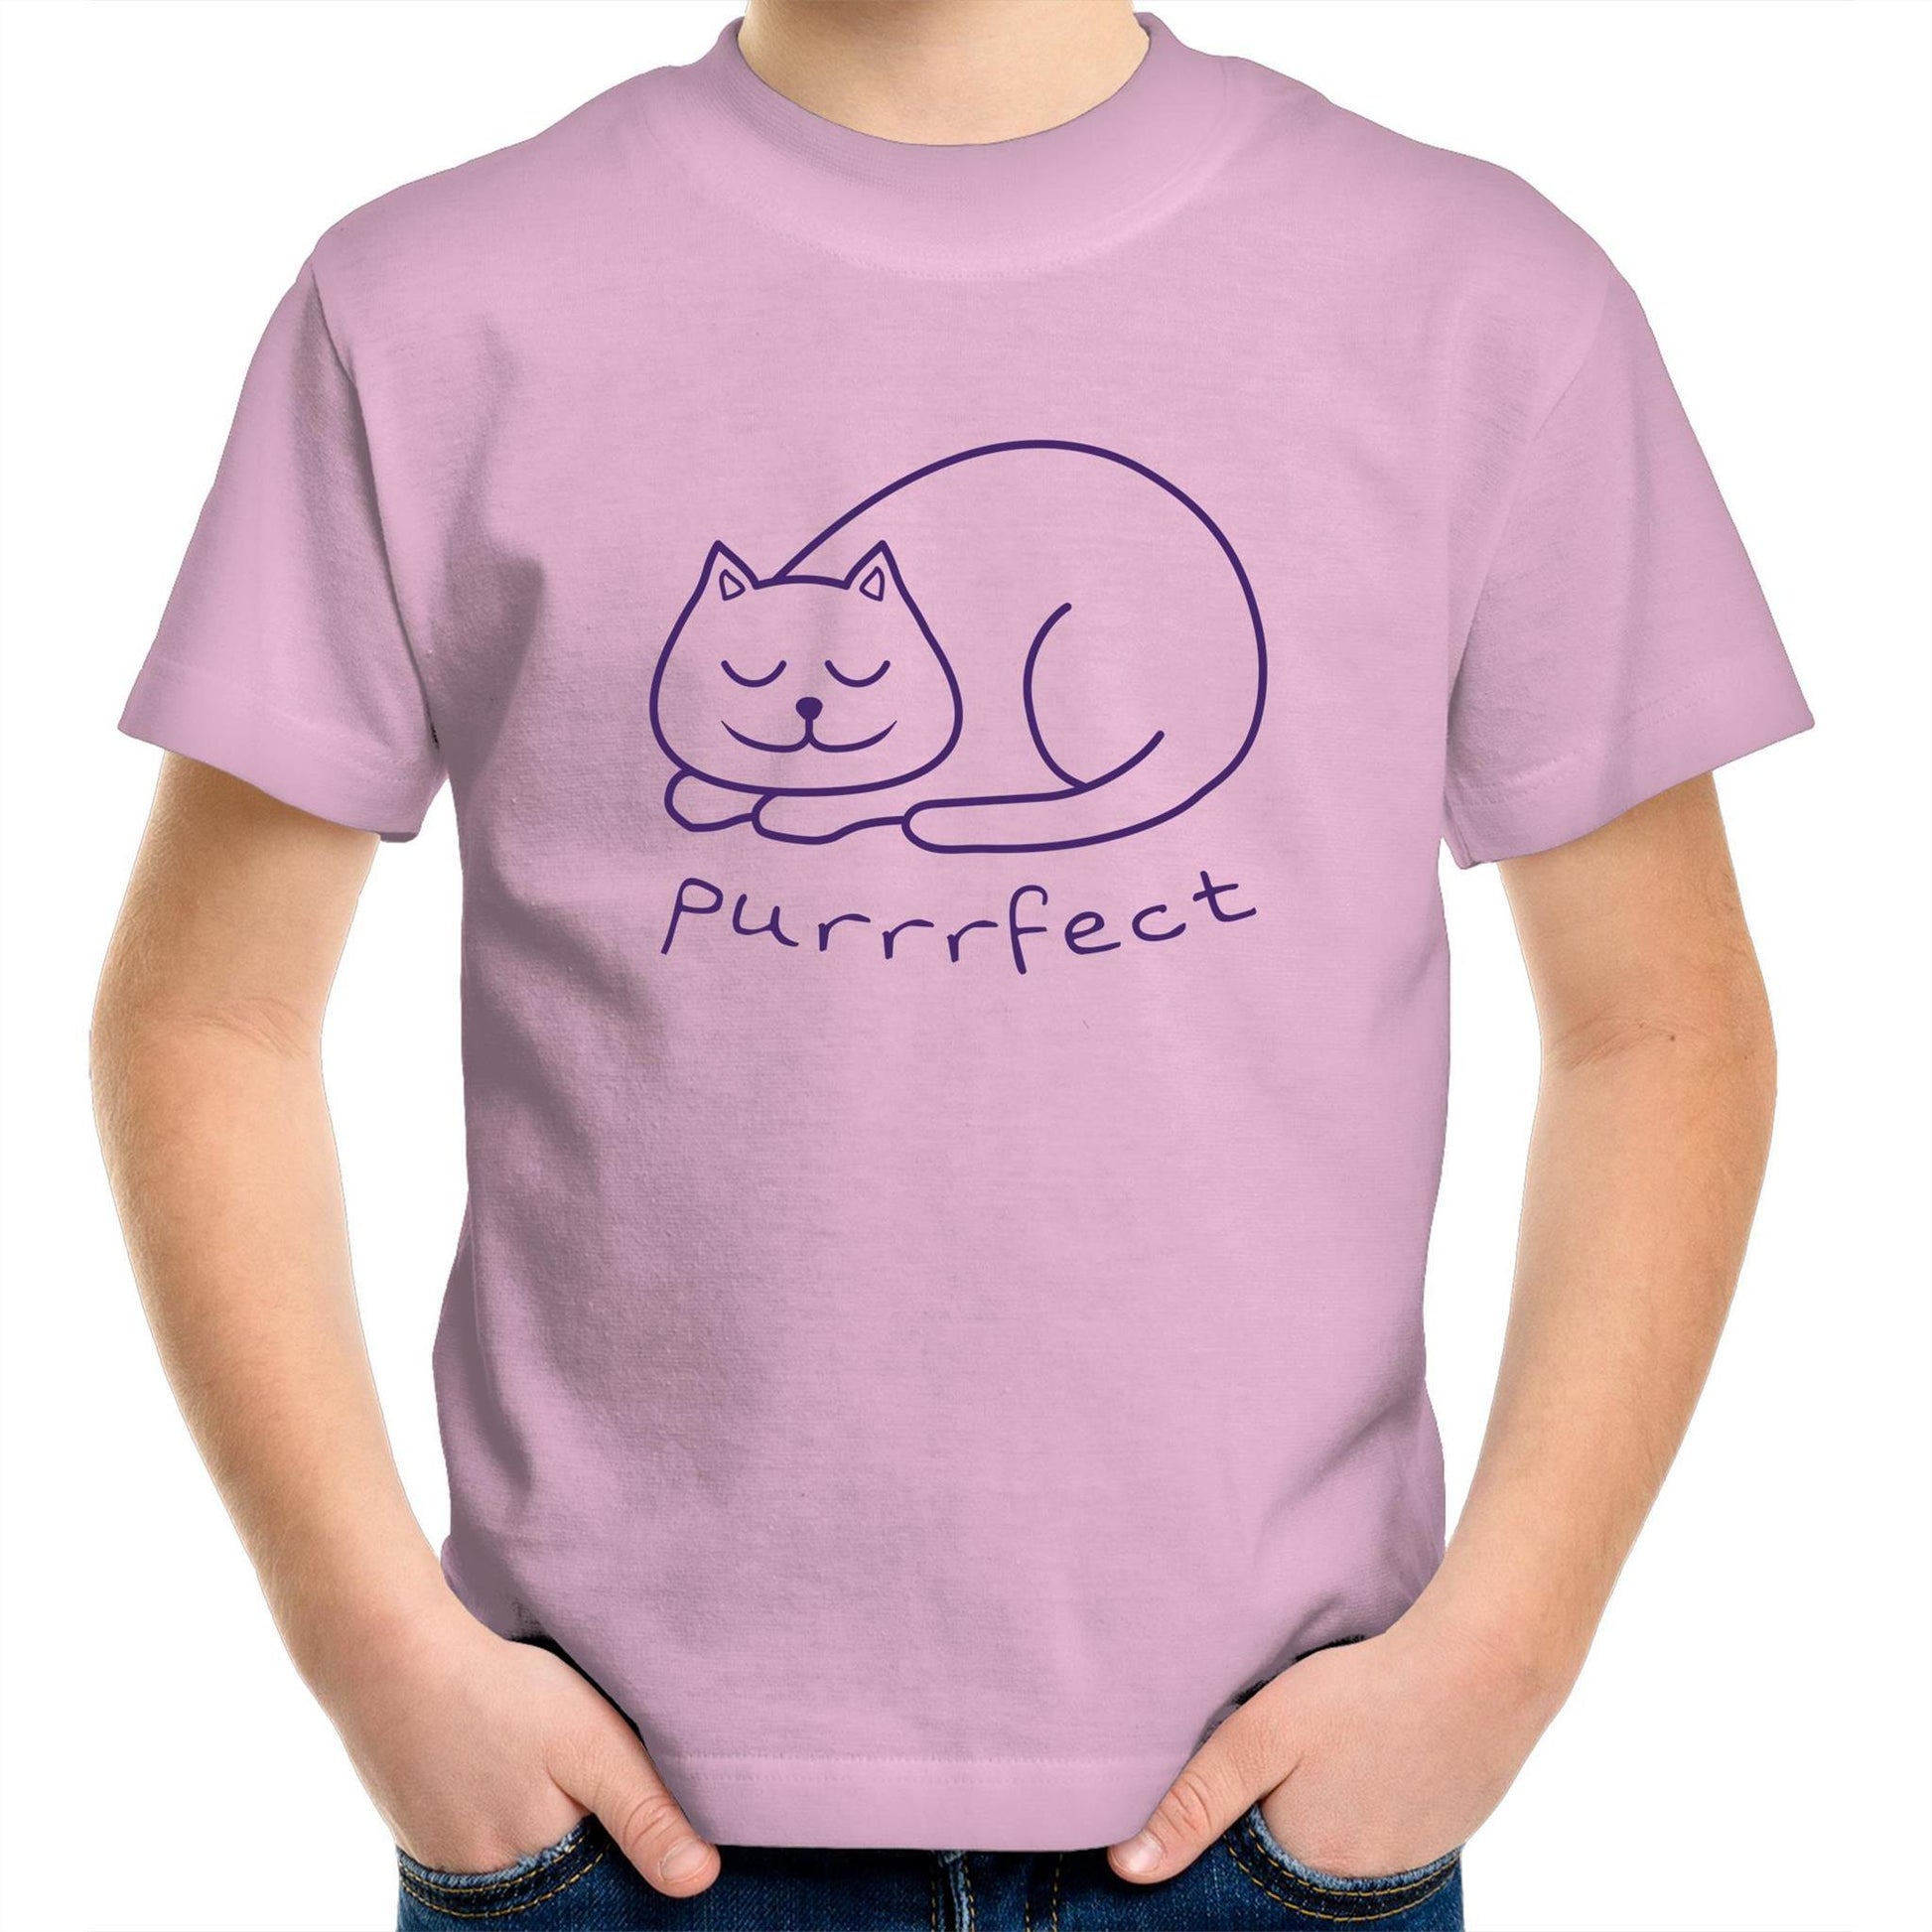 Purrrfect - Kids Youth Crew T-Shirt Pink Kids Youth T-shirt animal